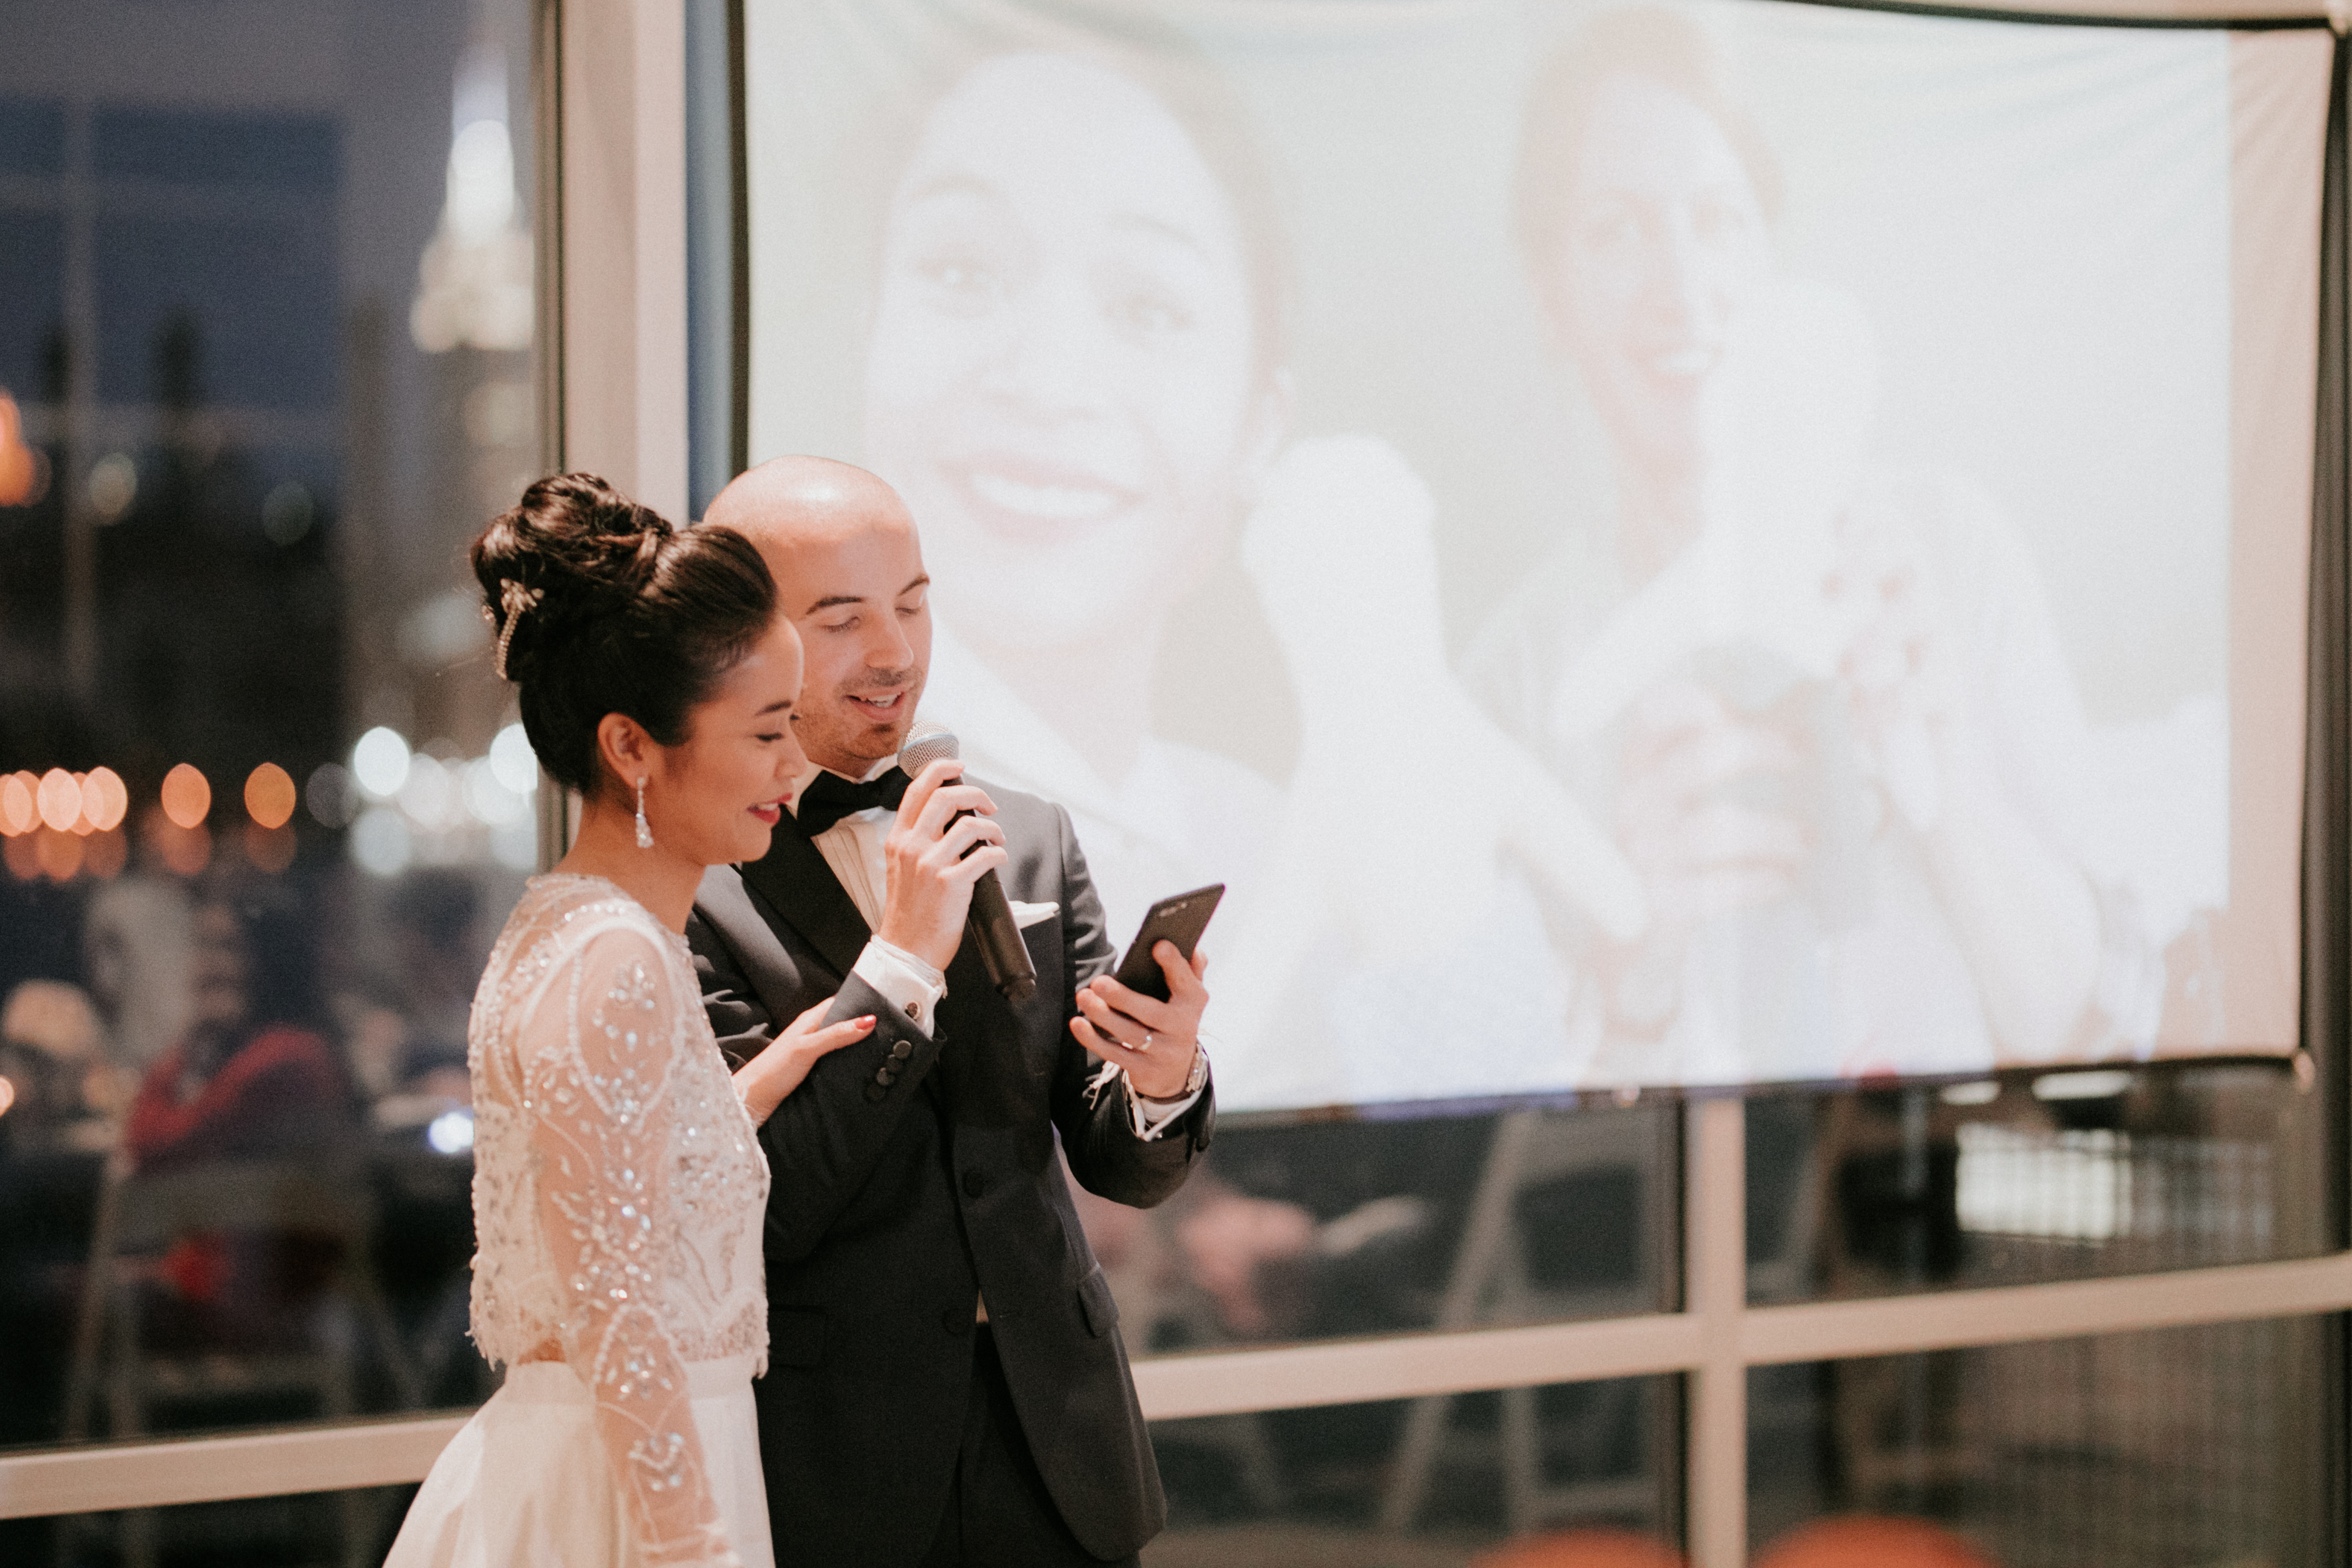 05 06 18 Elodie and Bertrand Wedding 461 - Wedding Video Sweepstakes Winners Wed at The W Loft in Brooklyn